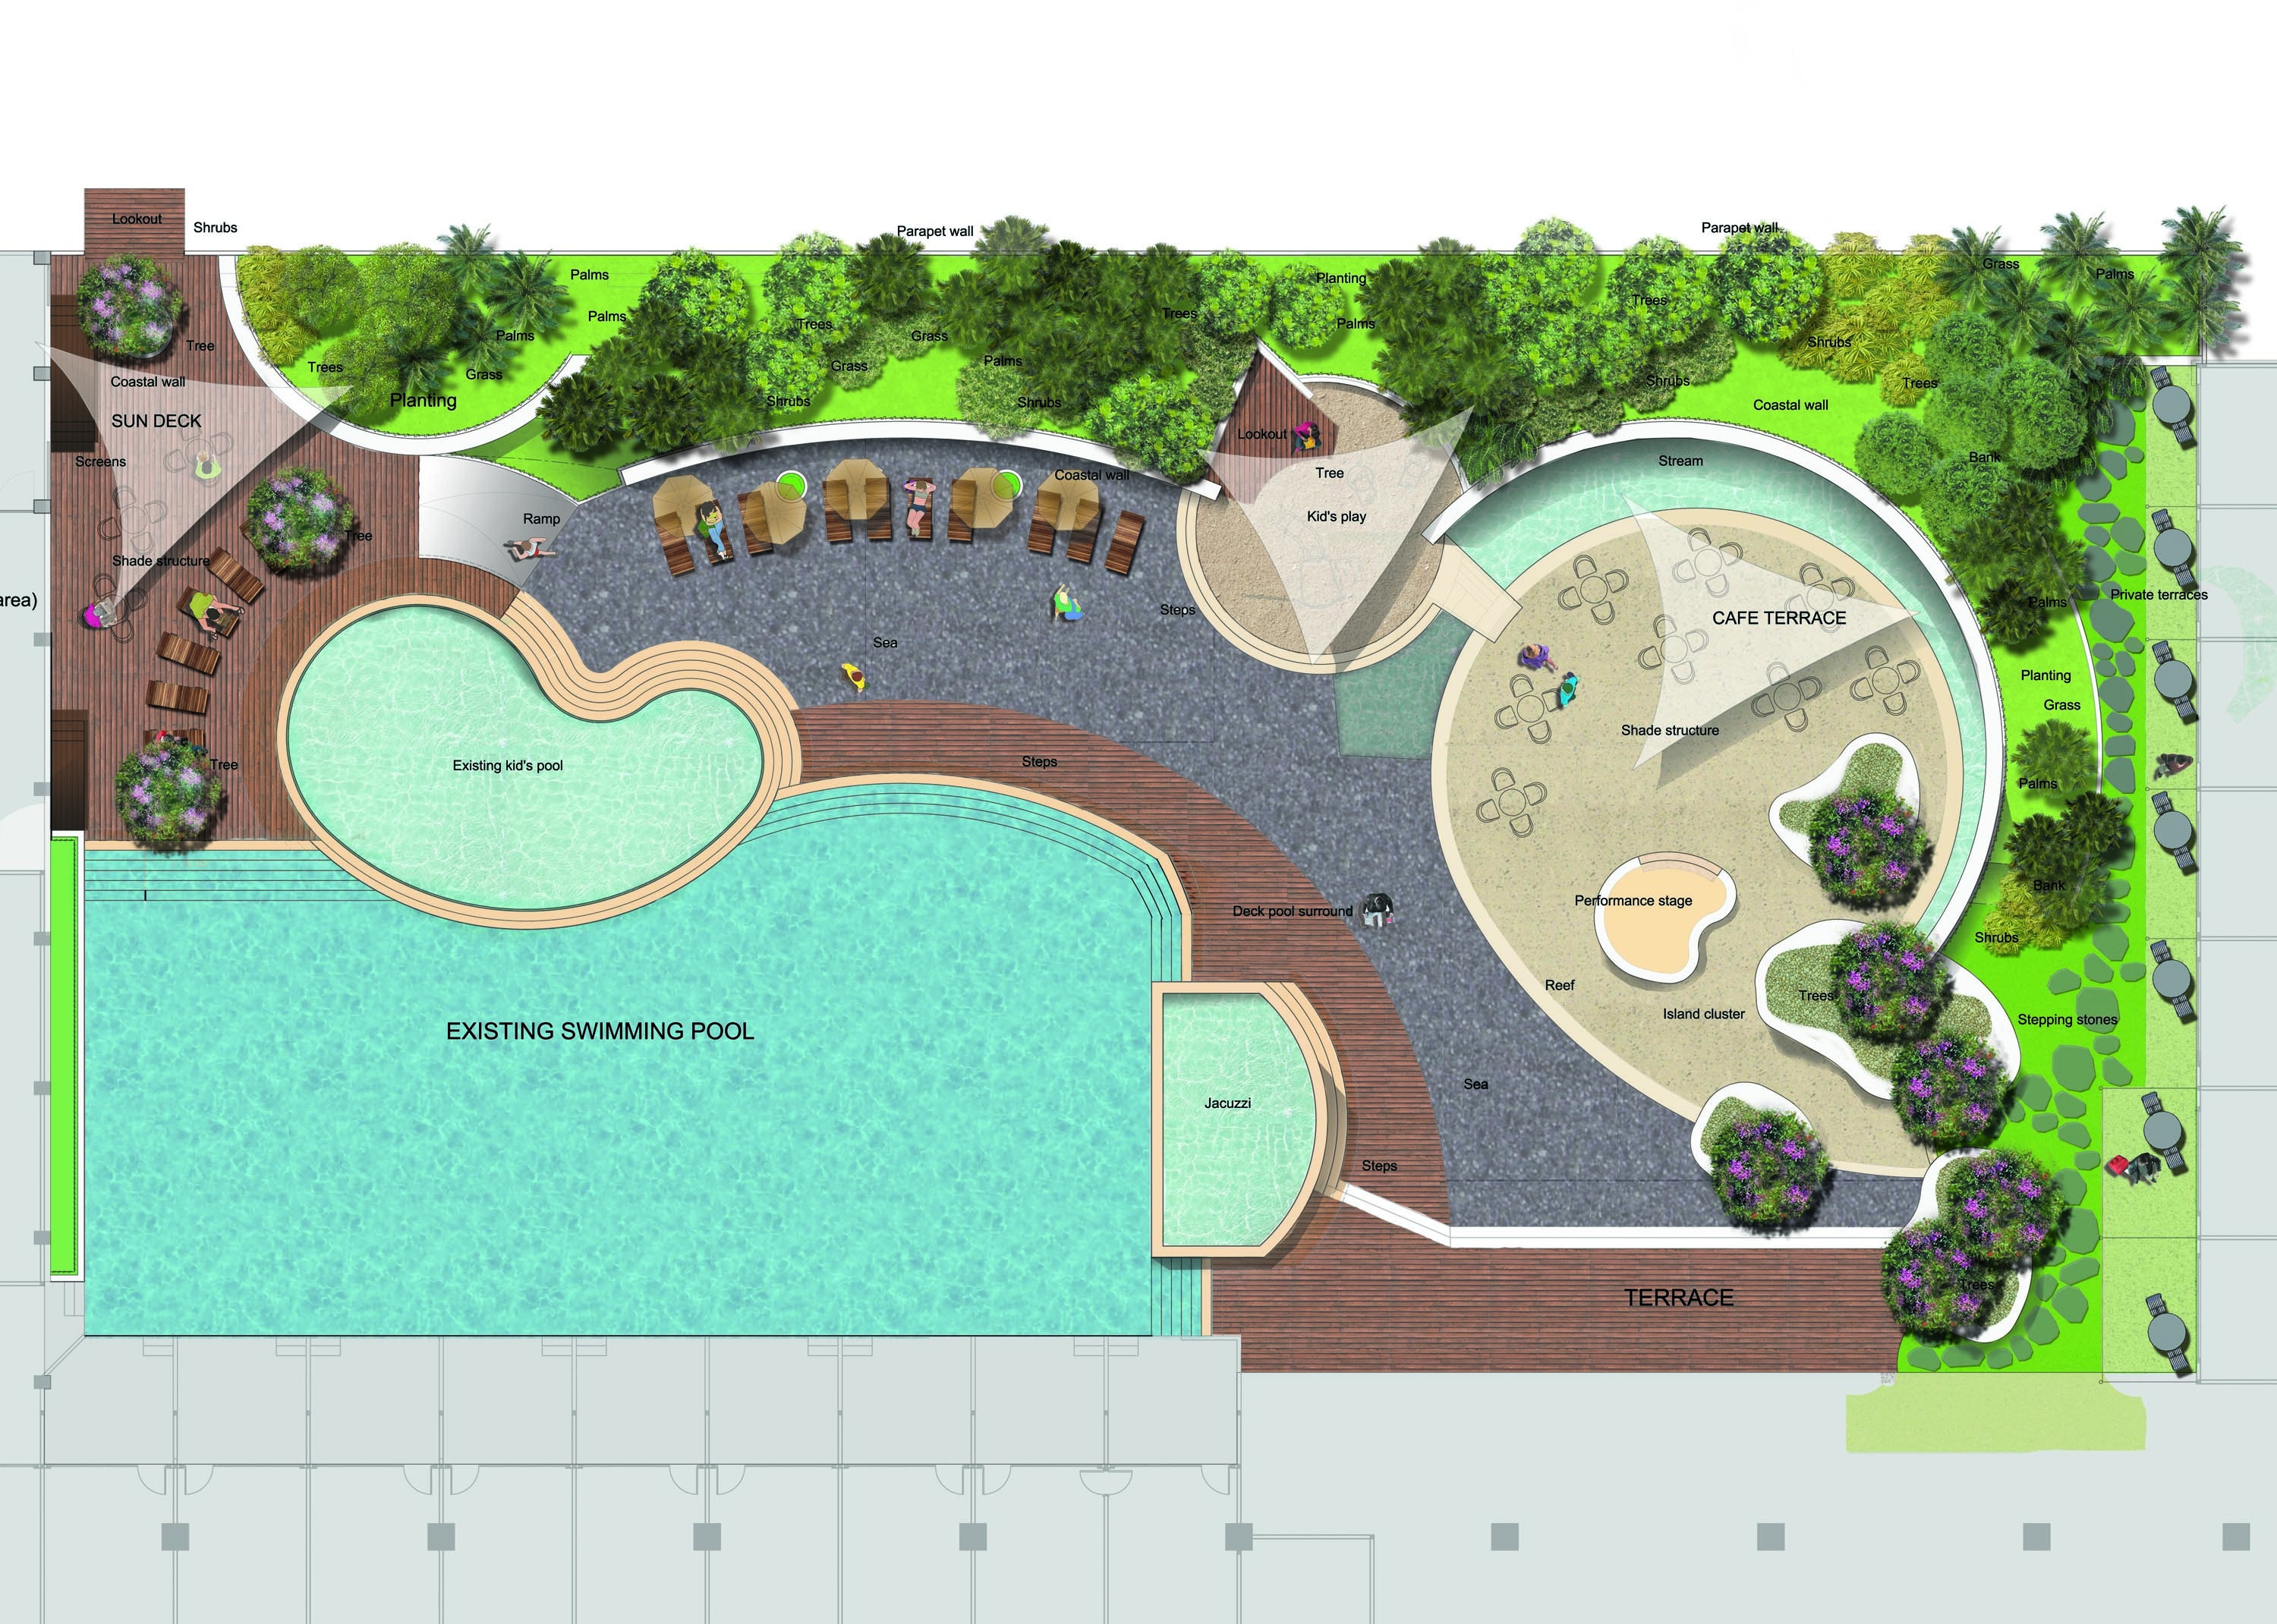  Illustrative plan - Sky pool